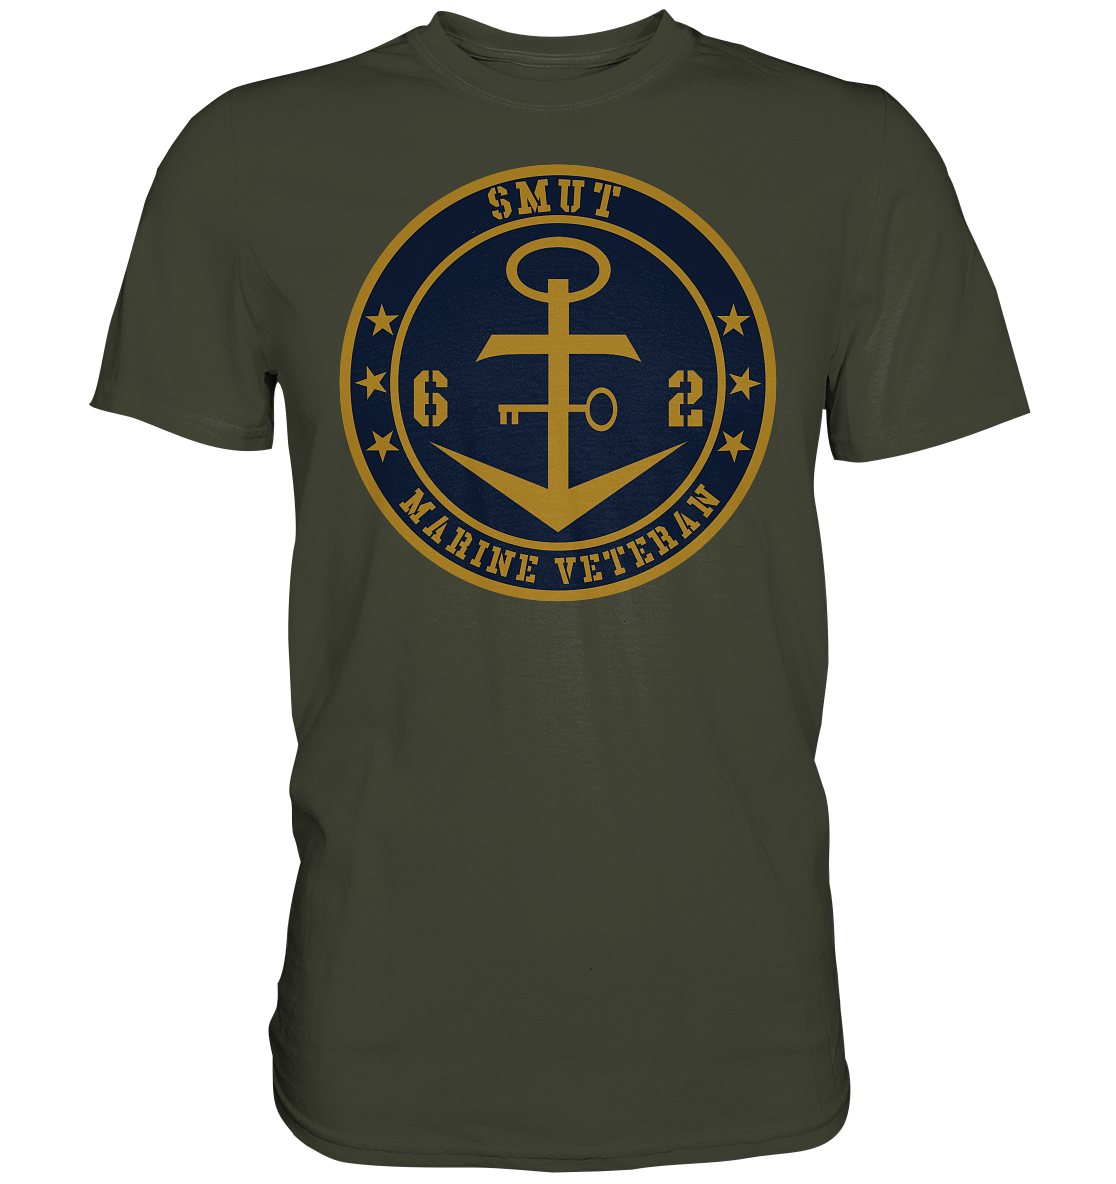 Marine Veteran 62er SMUT - Premium Shirt